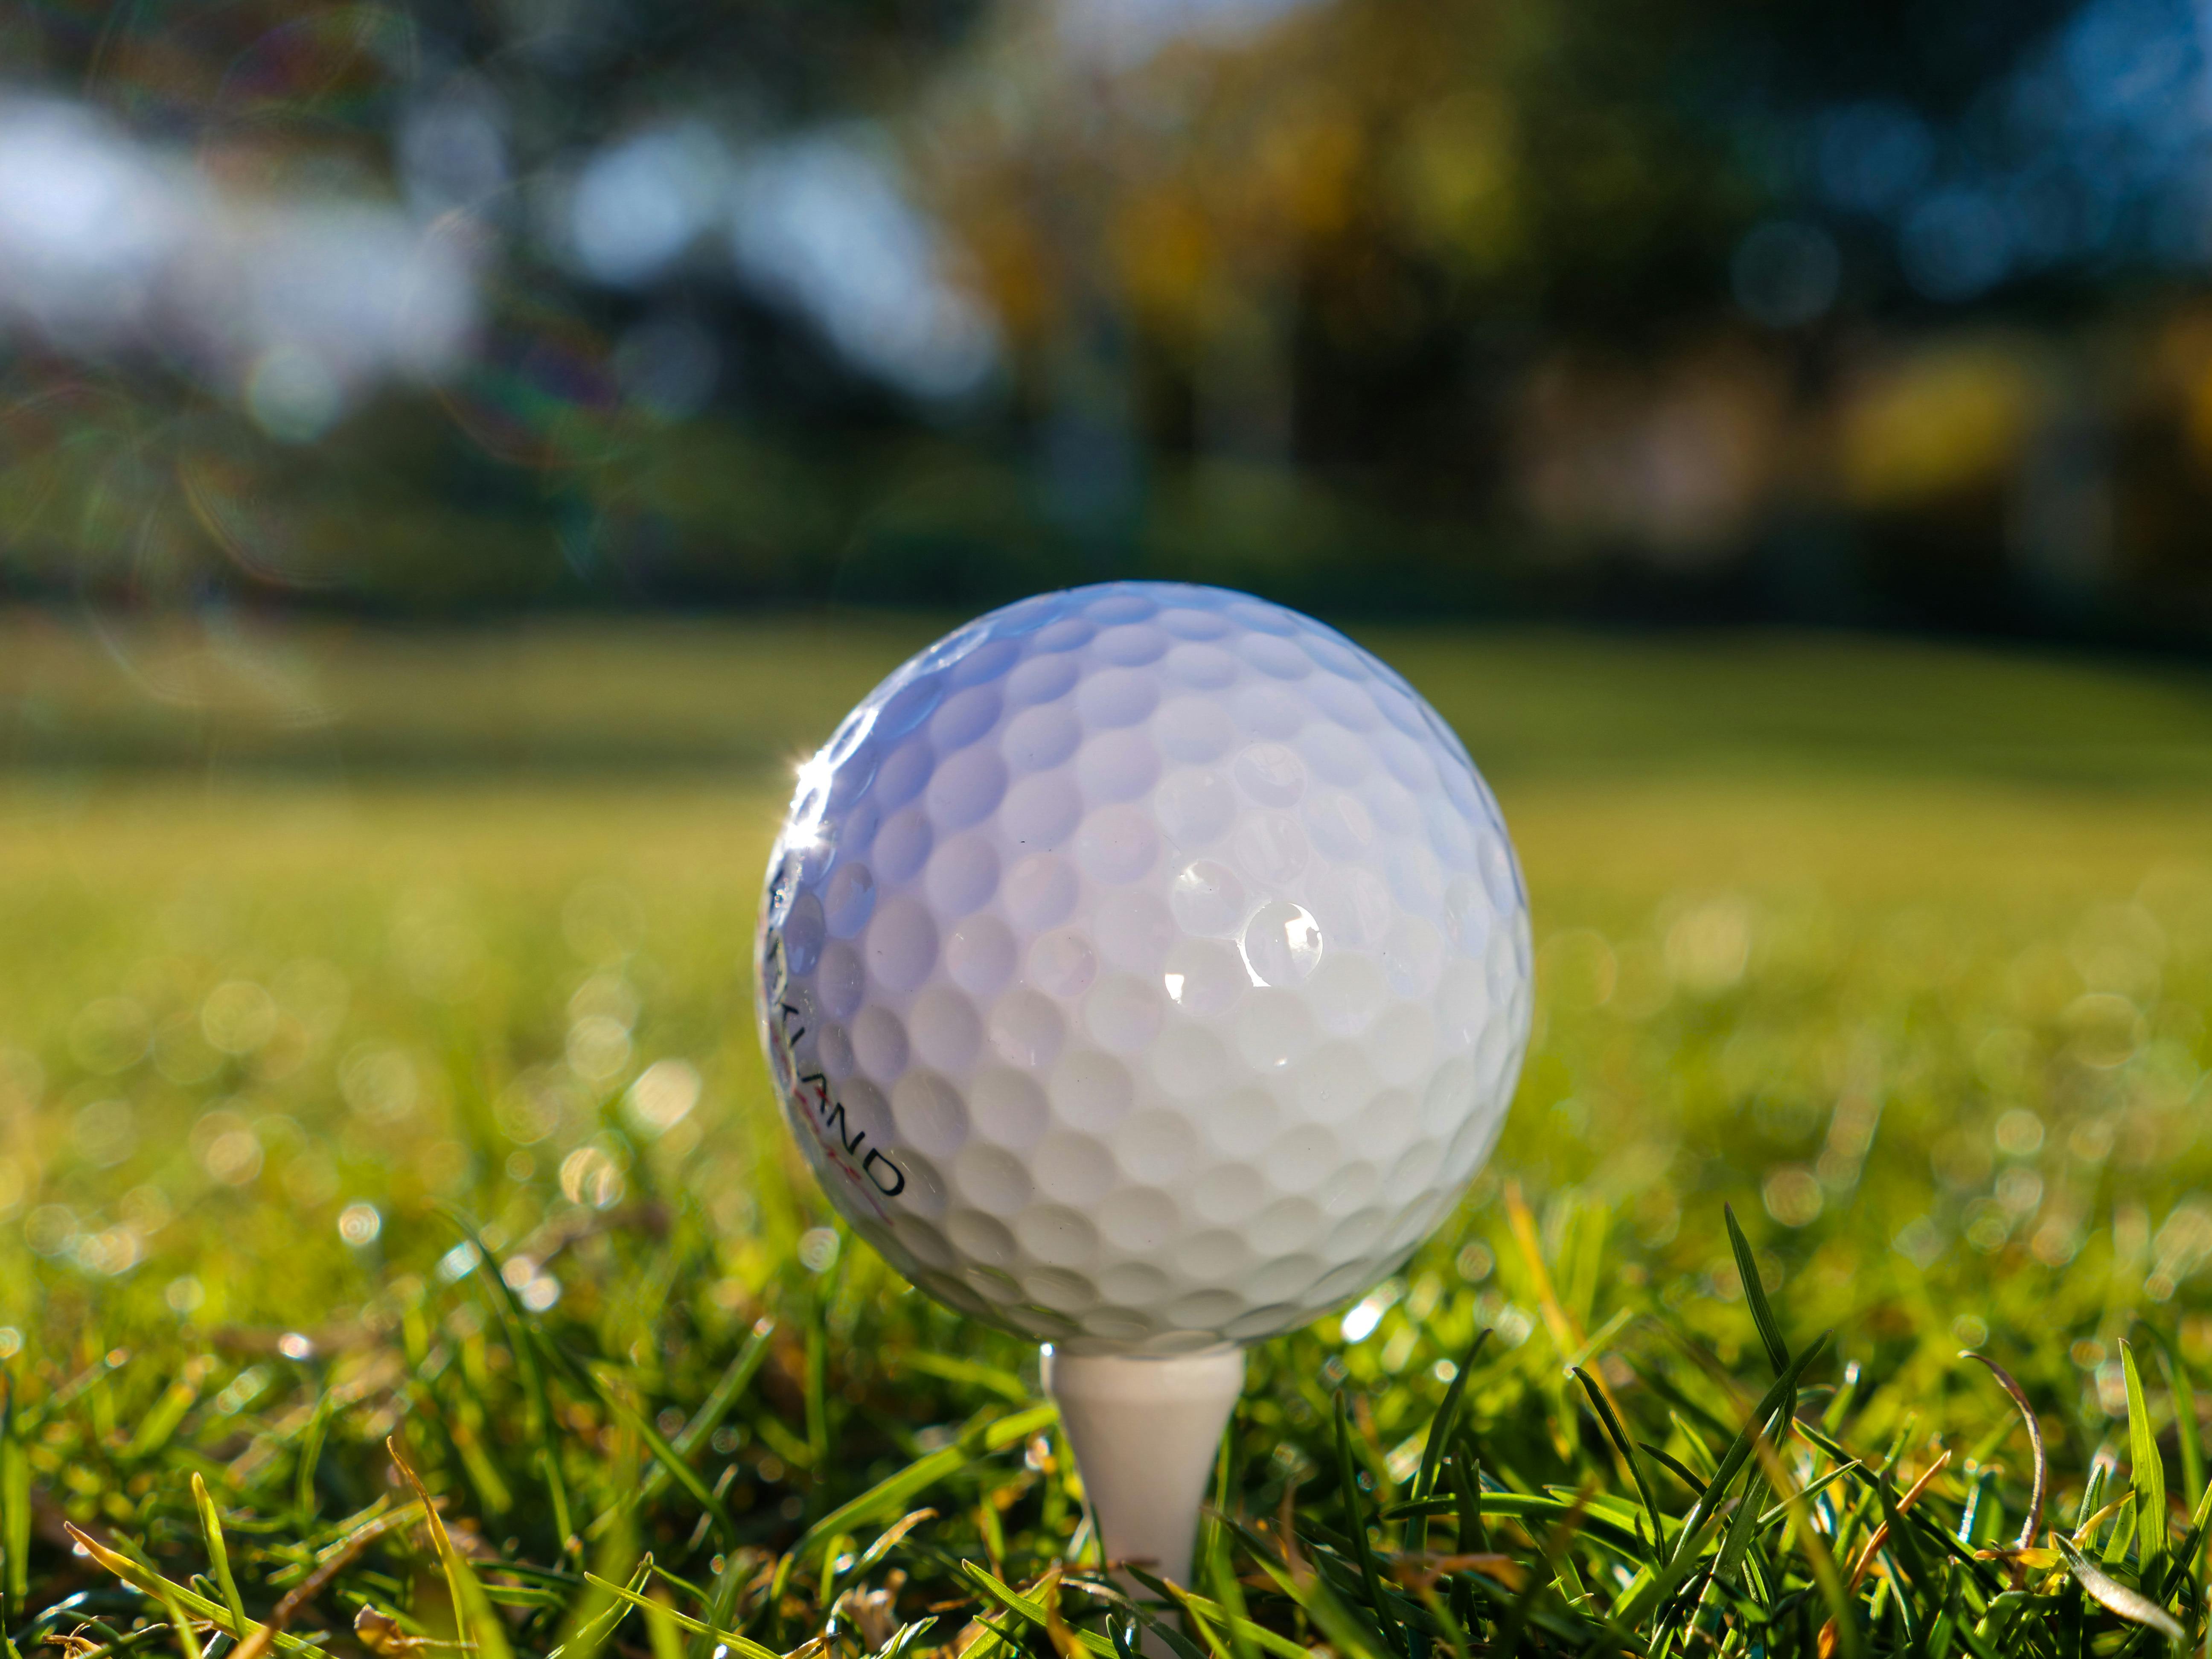 Golf club hitting ball on field · Free Stock Photo